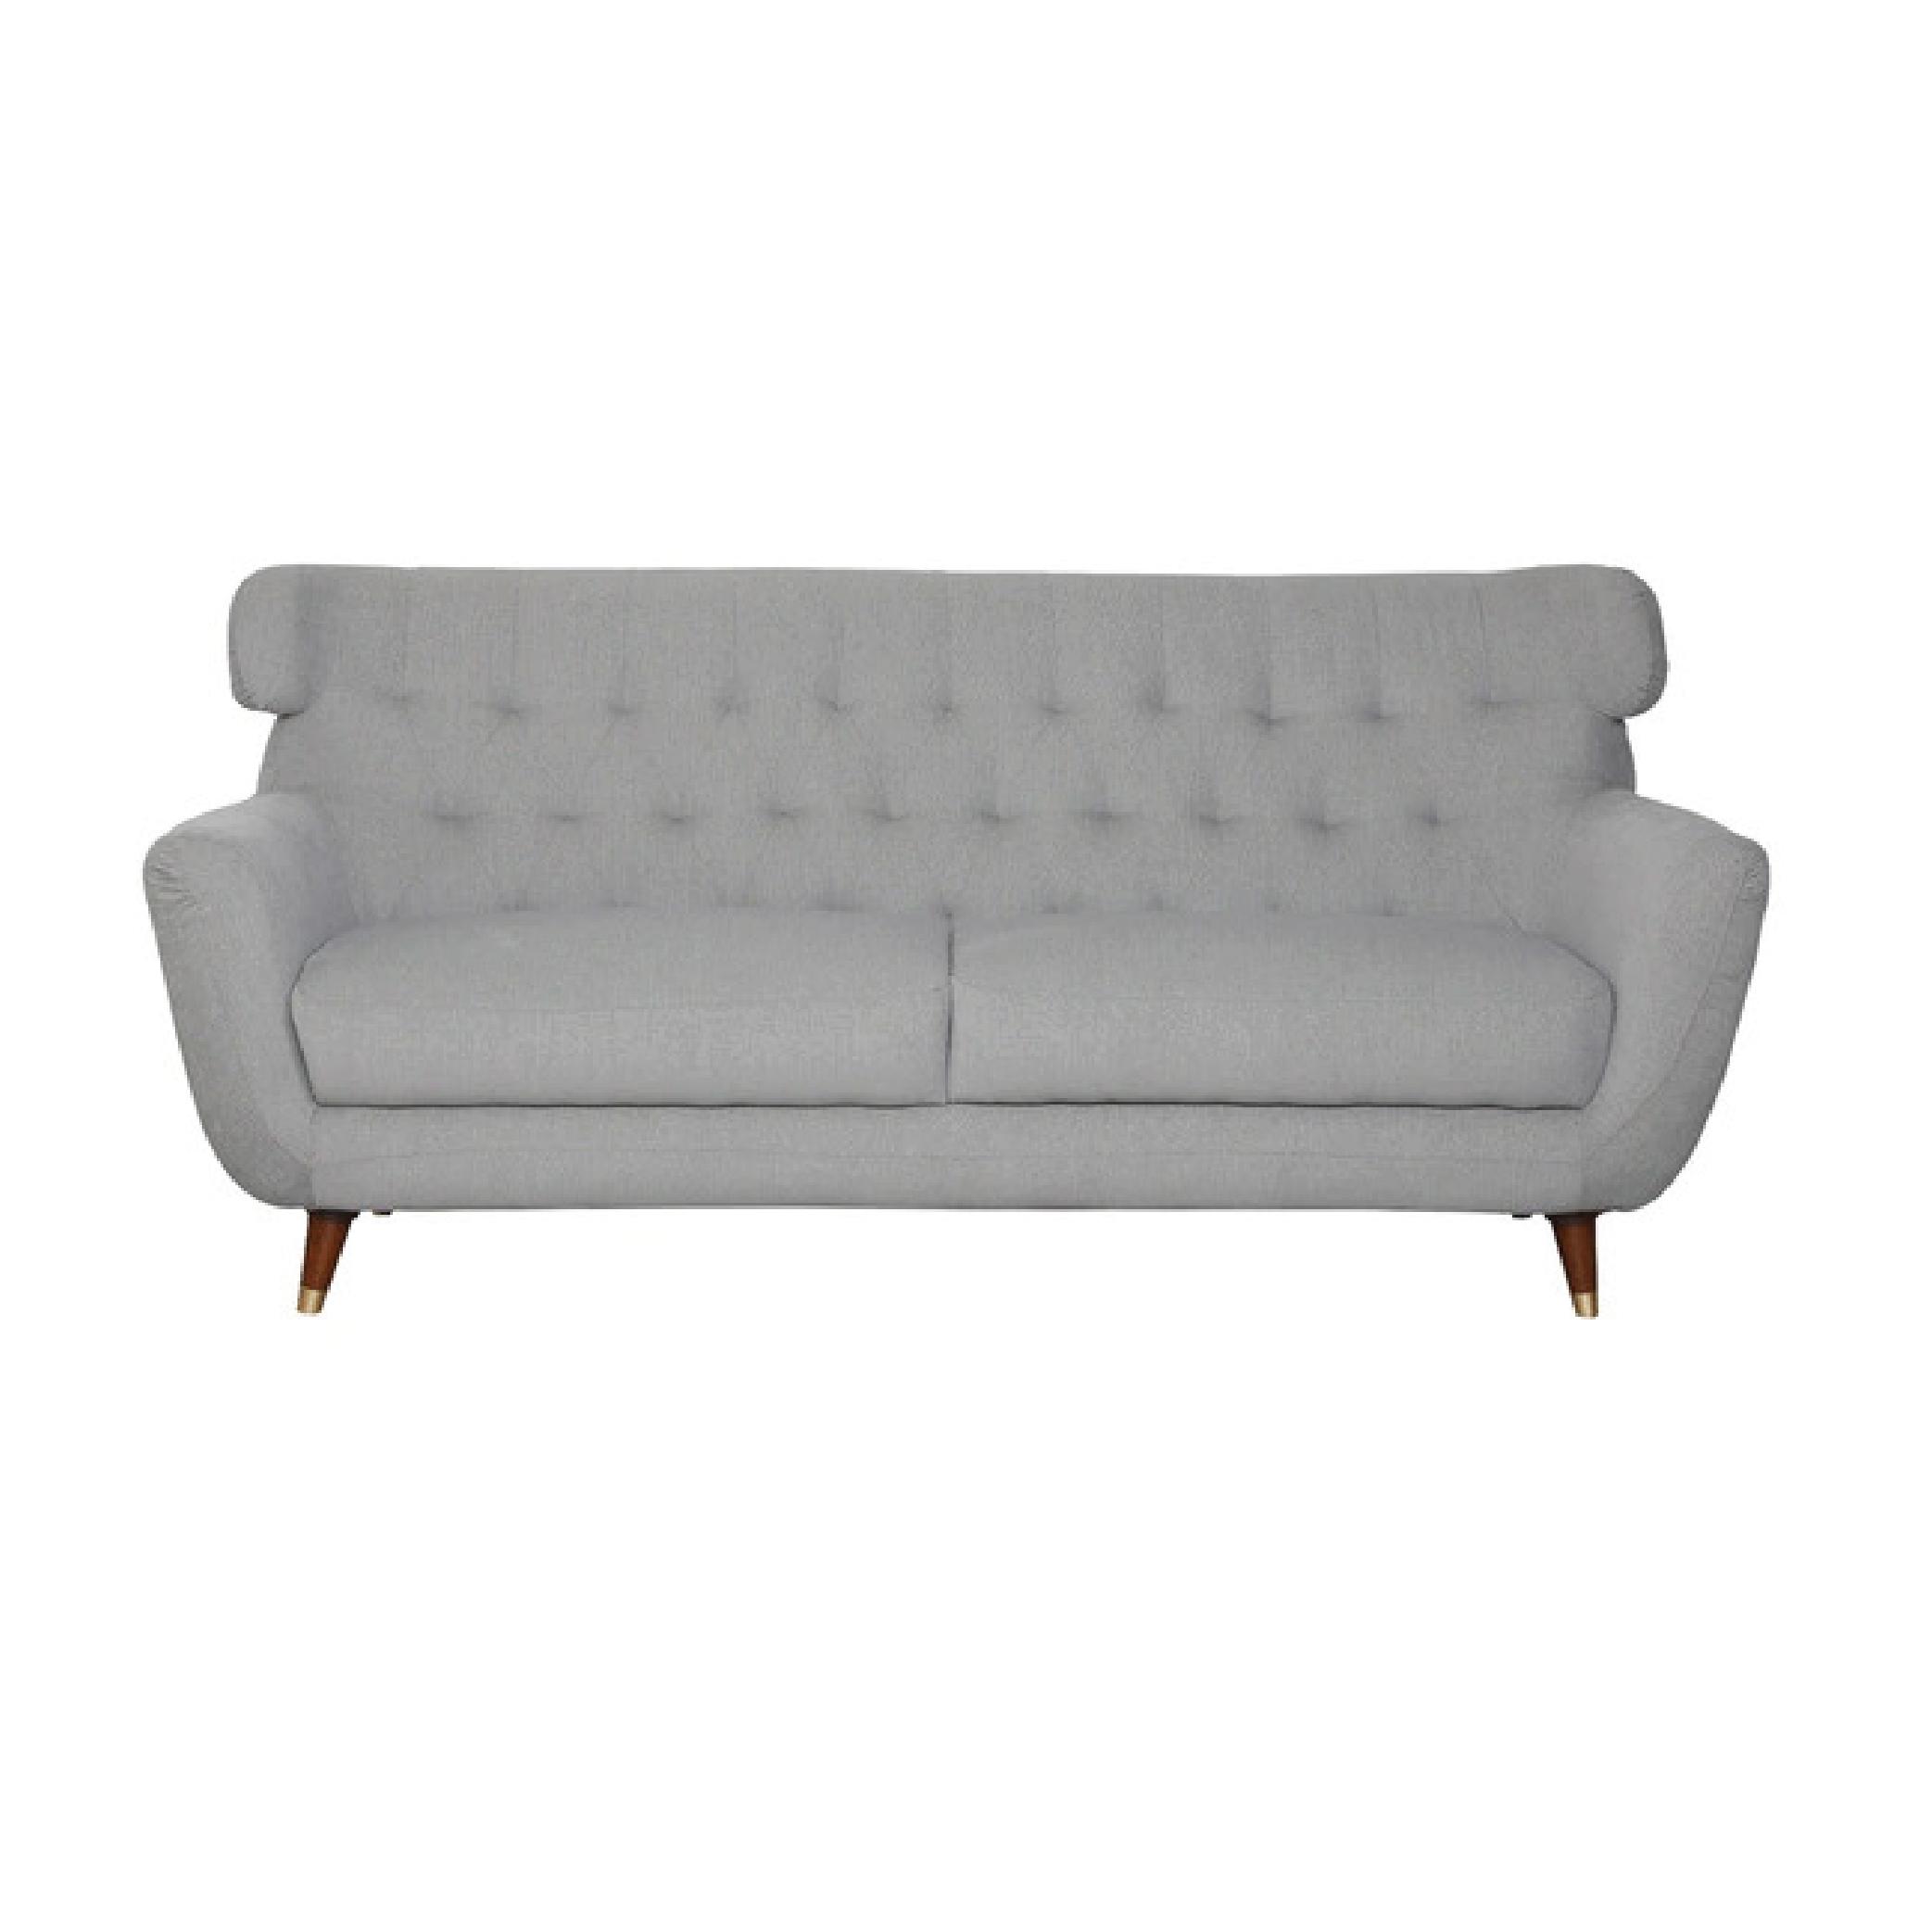 Avellino Two Seater Fabric Sofa